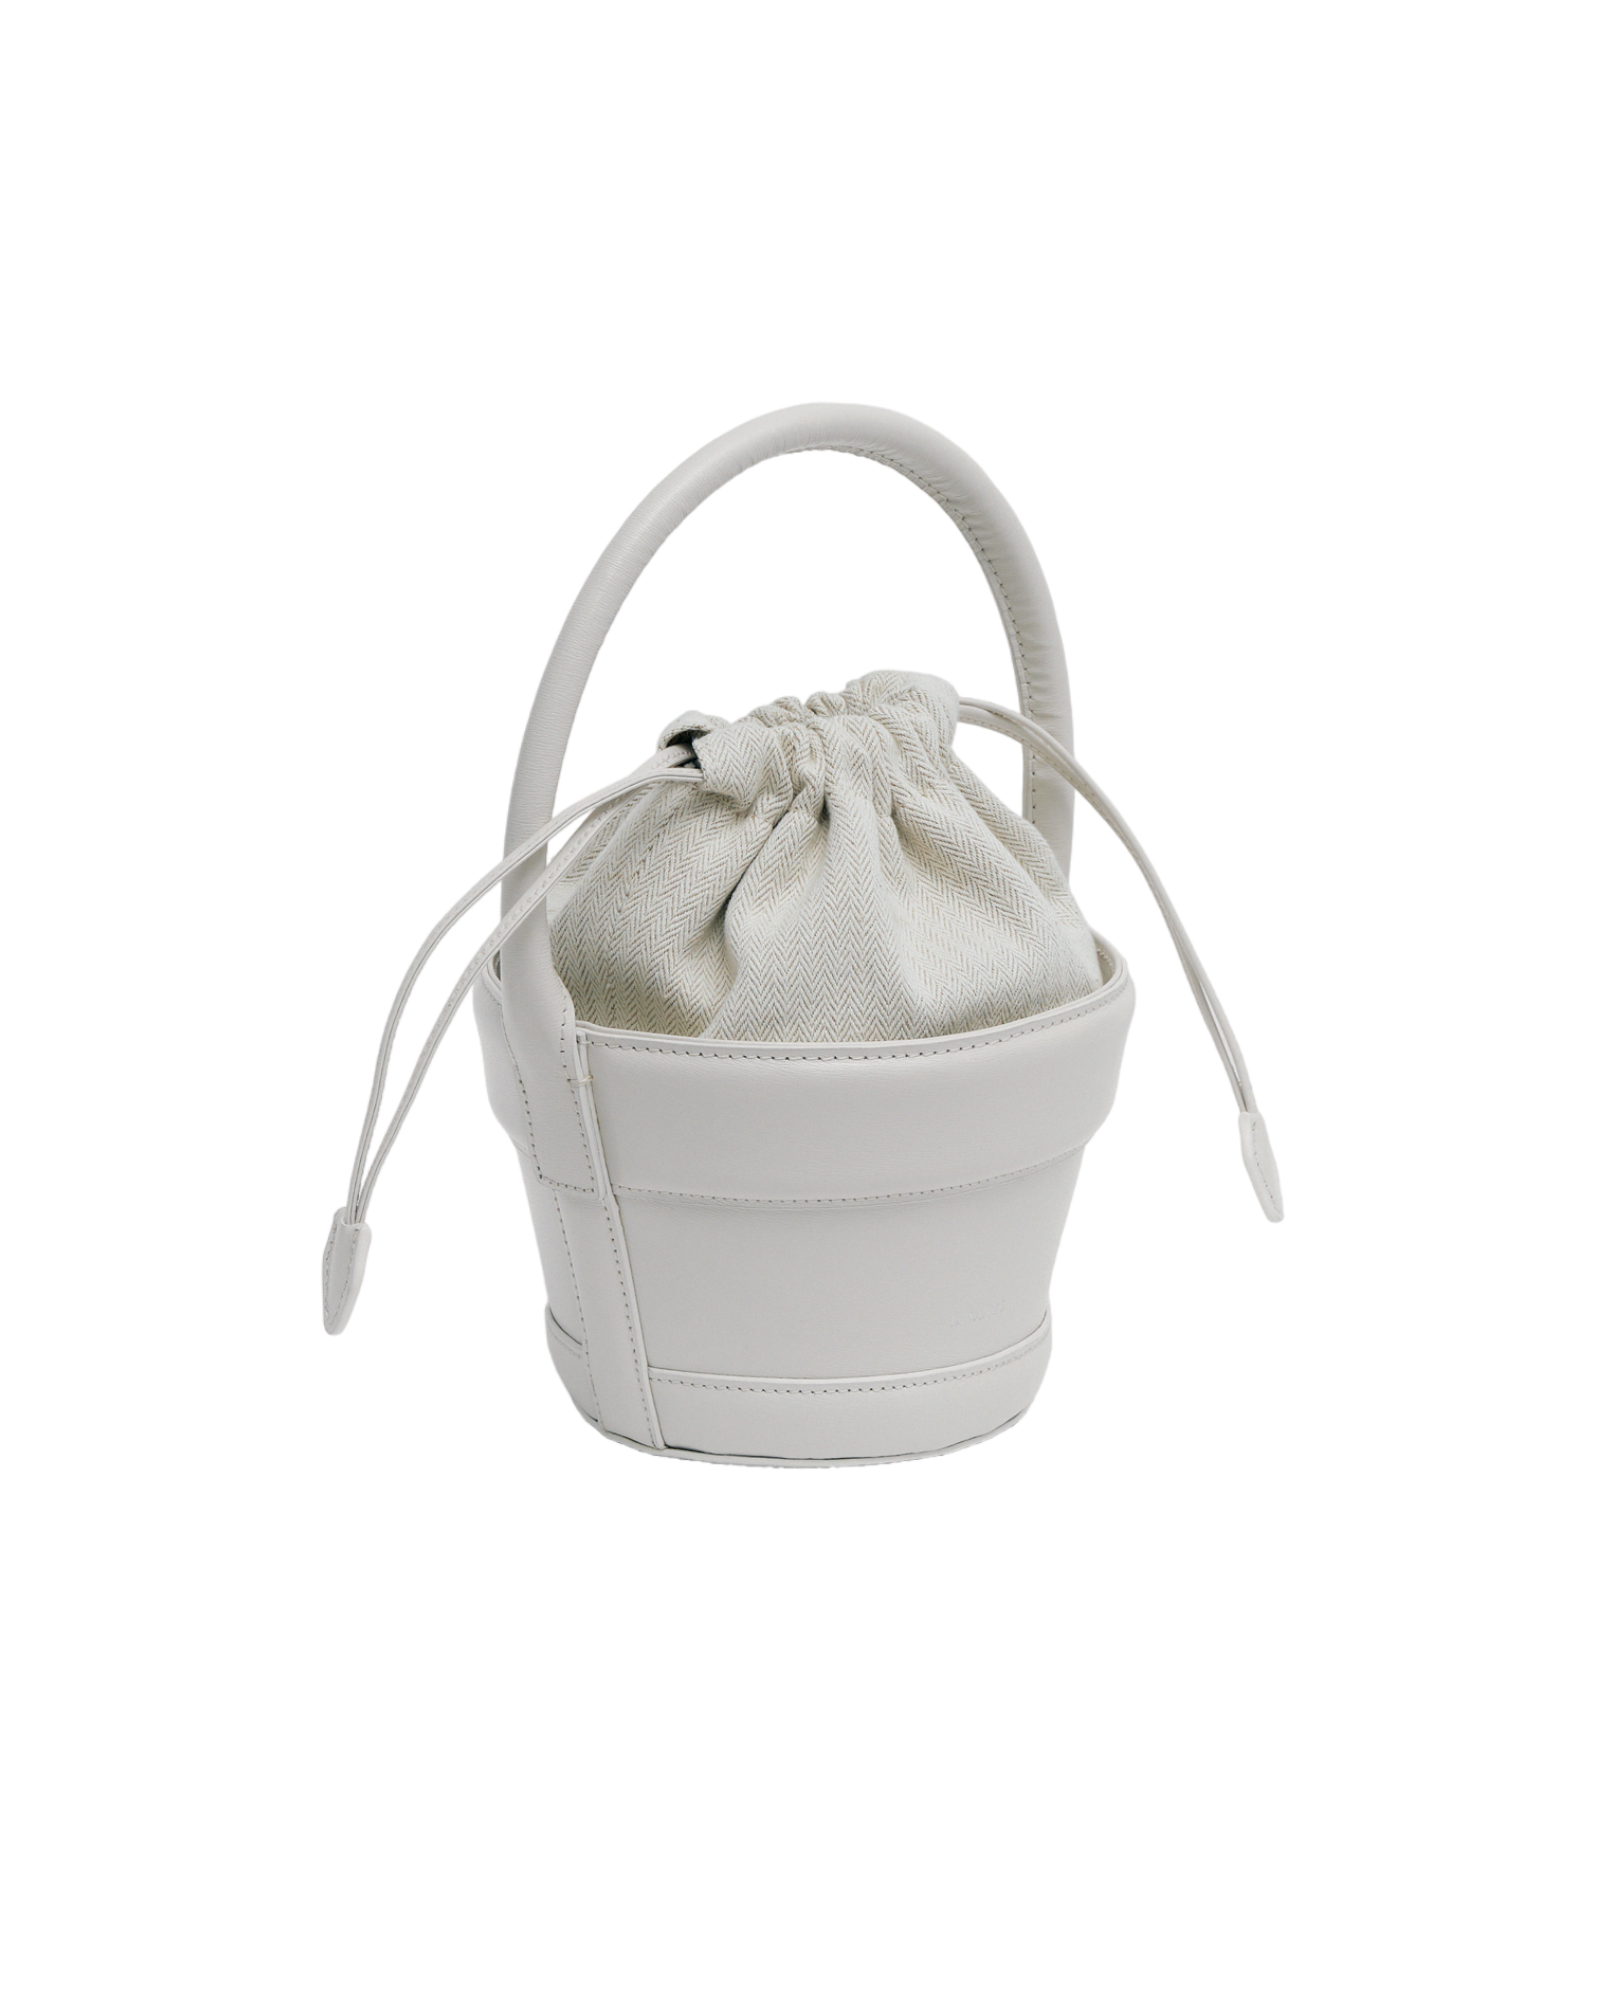 Bucket Bag In White